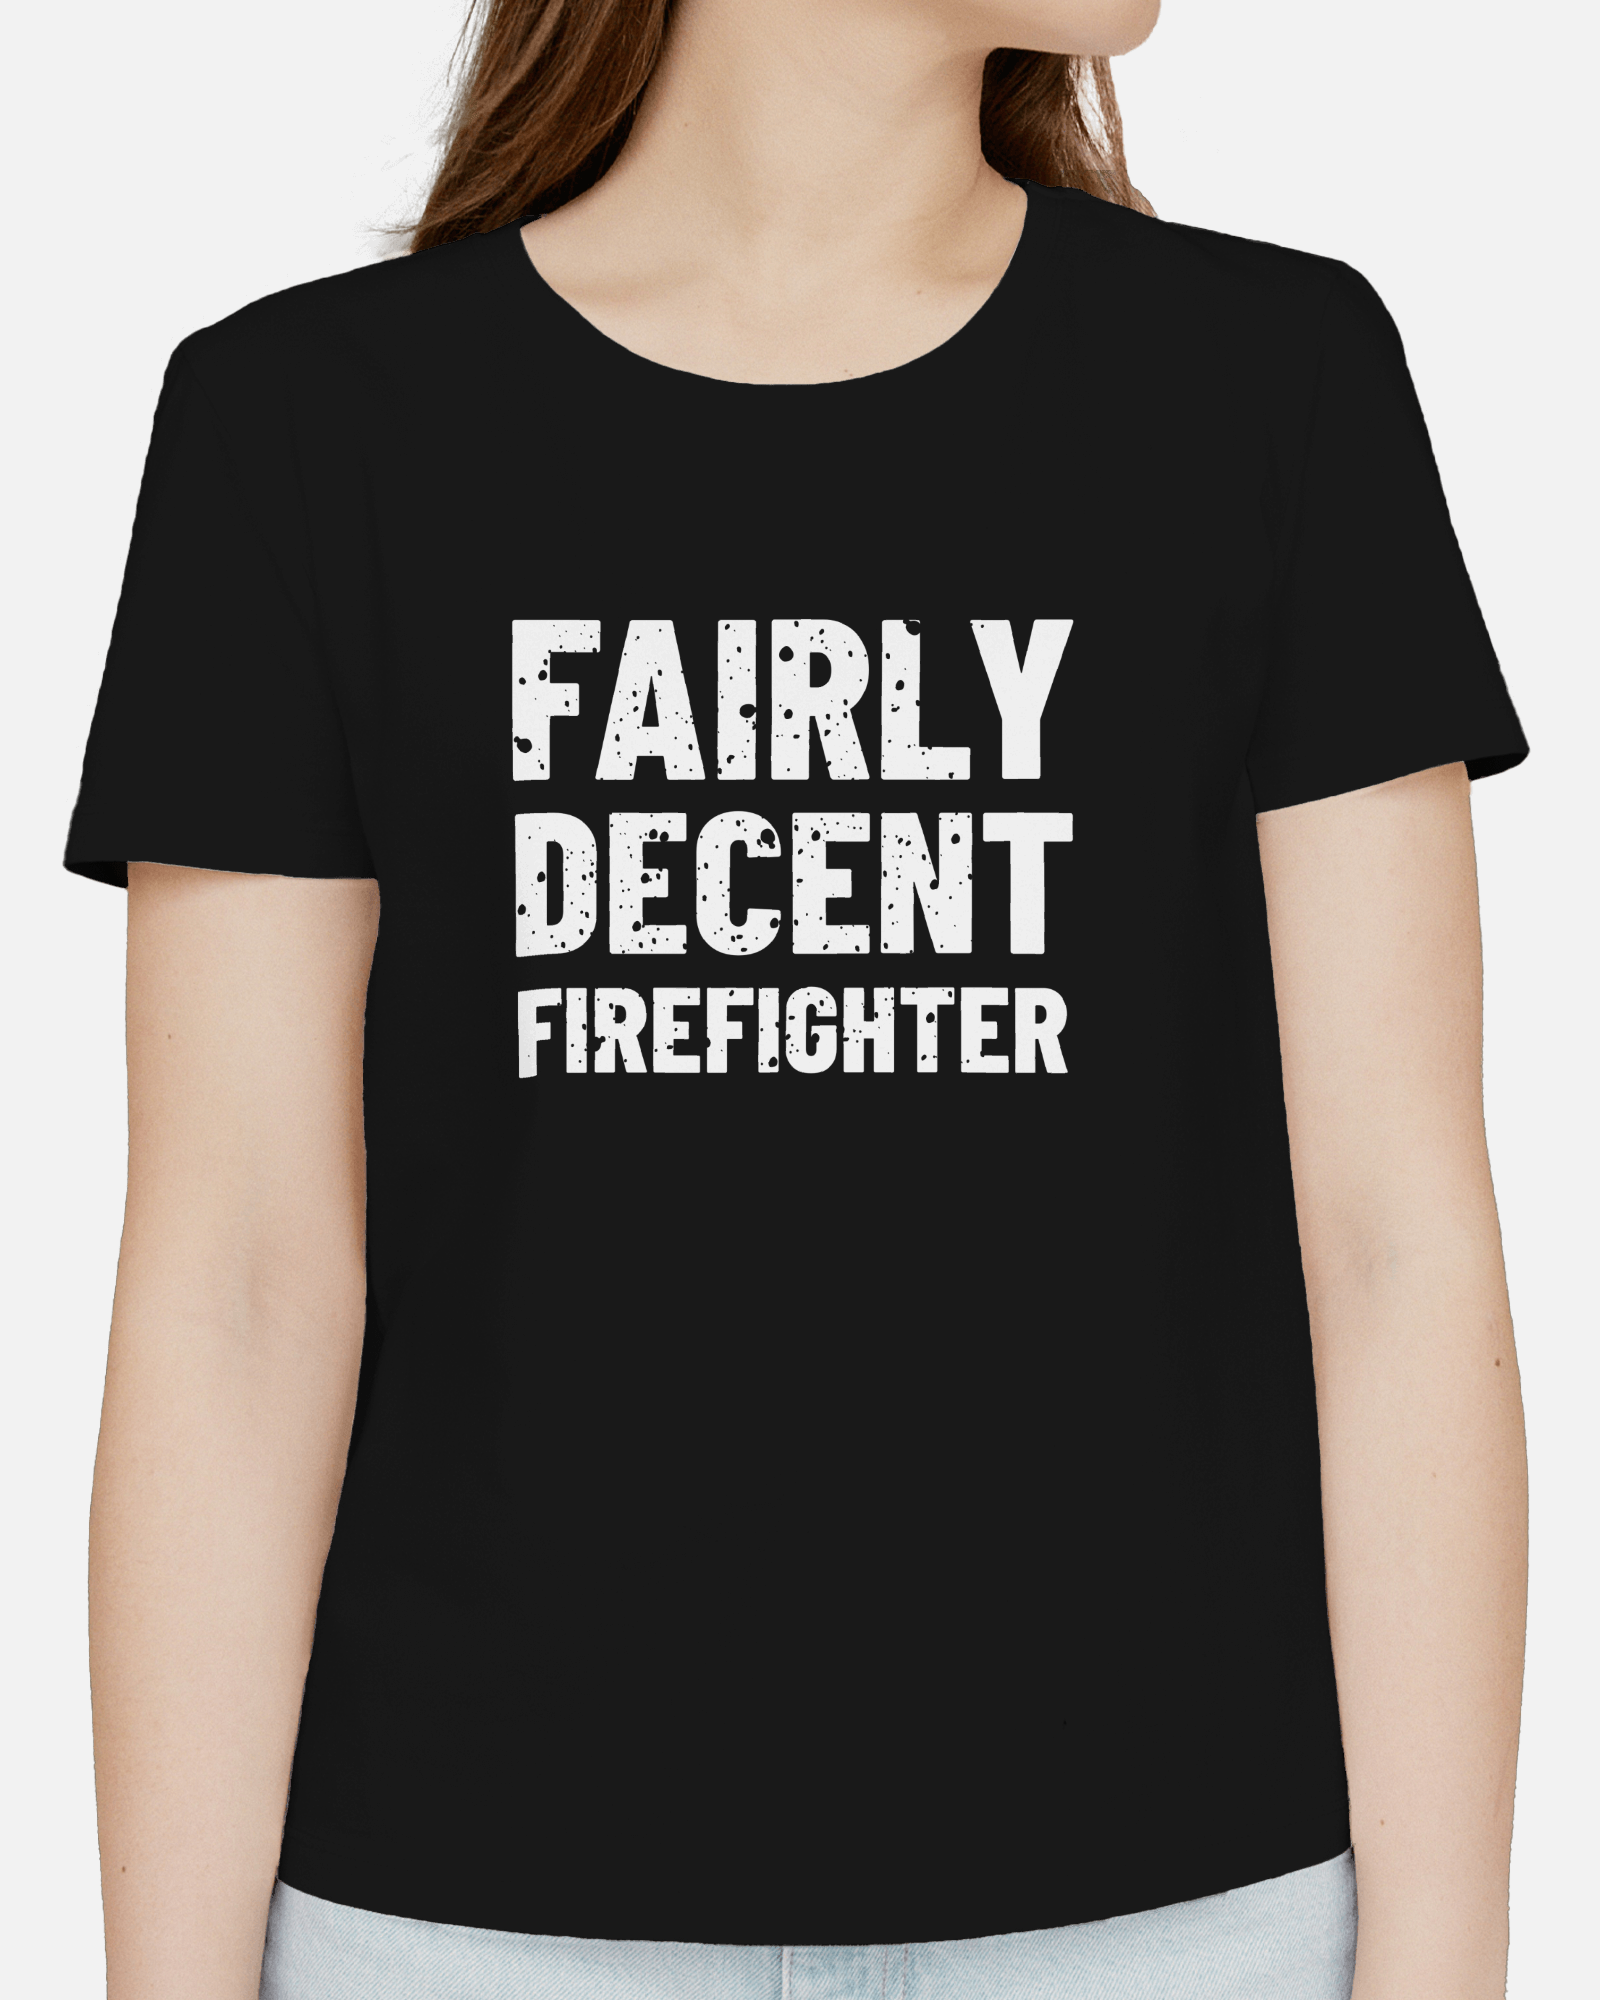 firefighter shirt for women